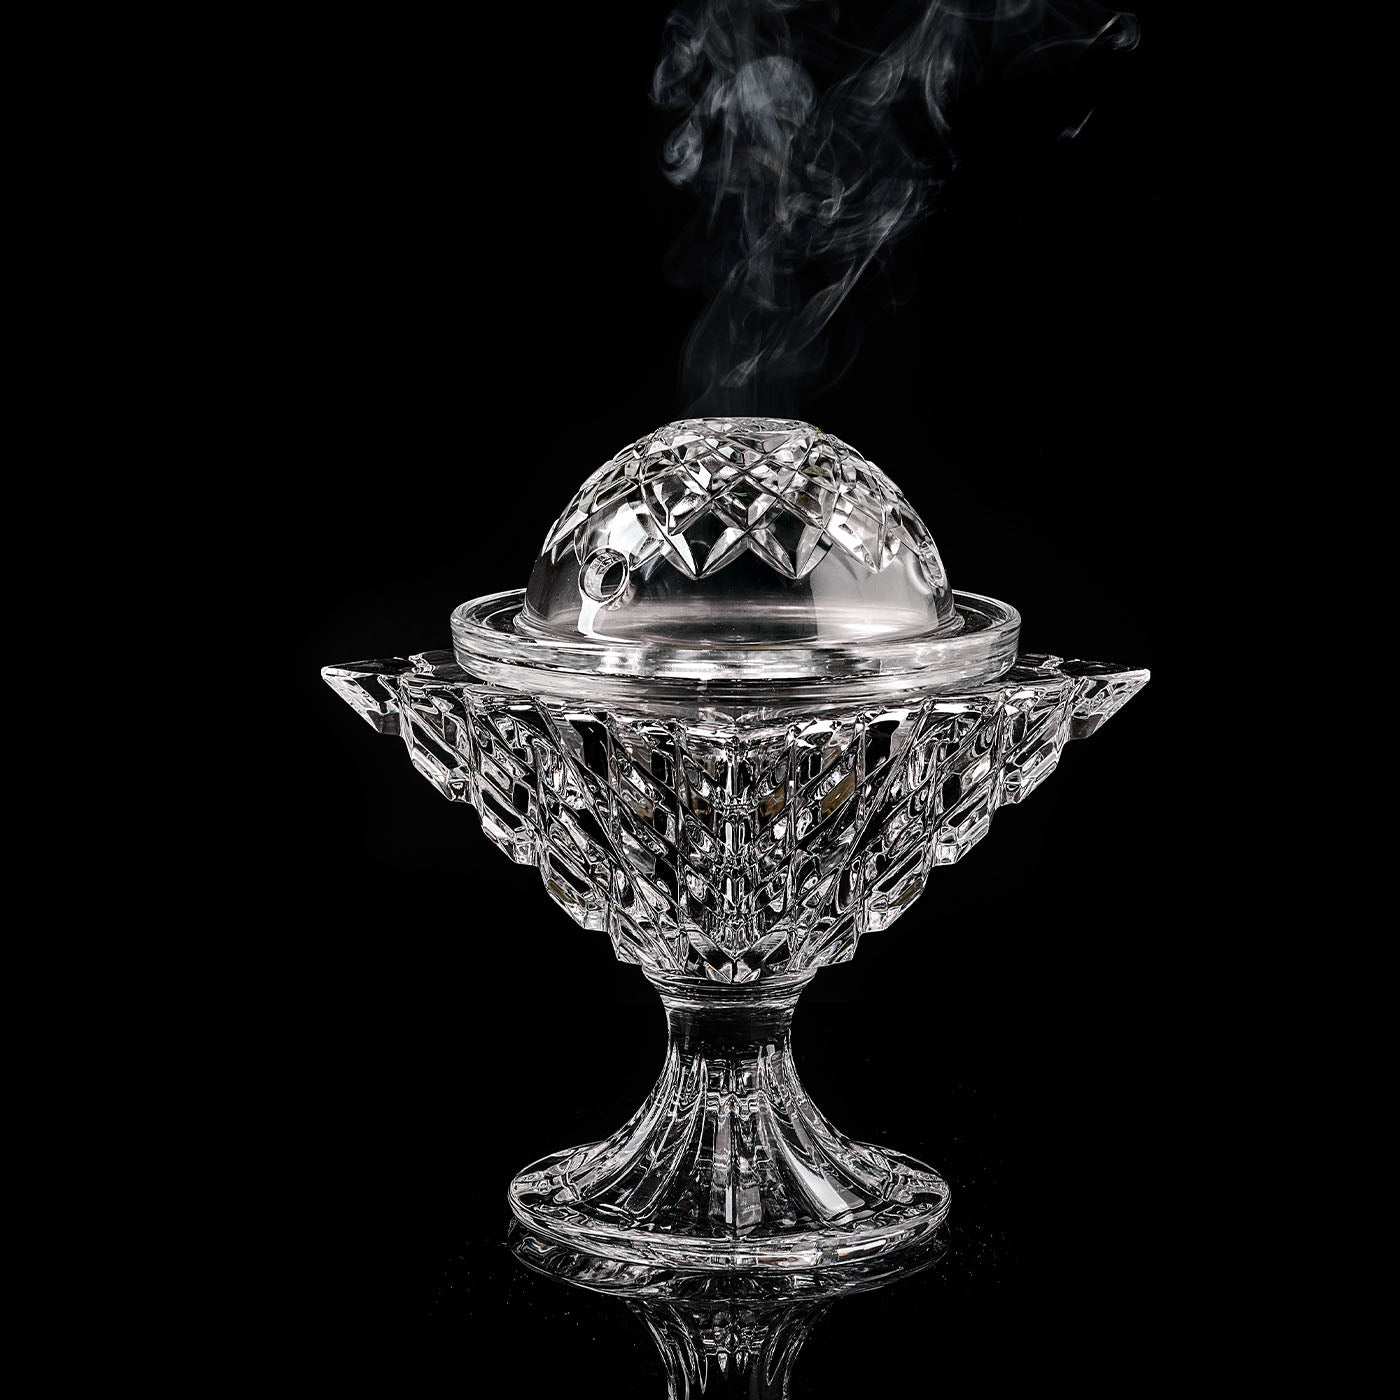 Ayurveda Crystal Incense Burner #1 - Alternative view 1